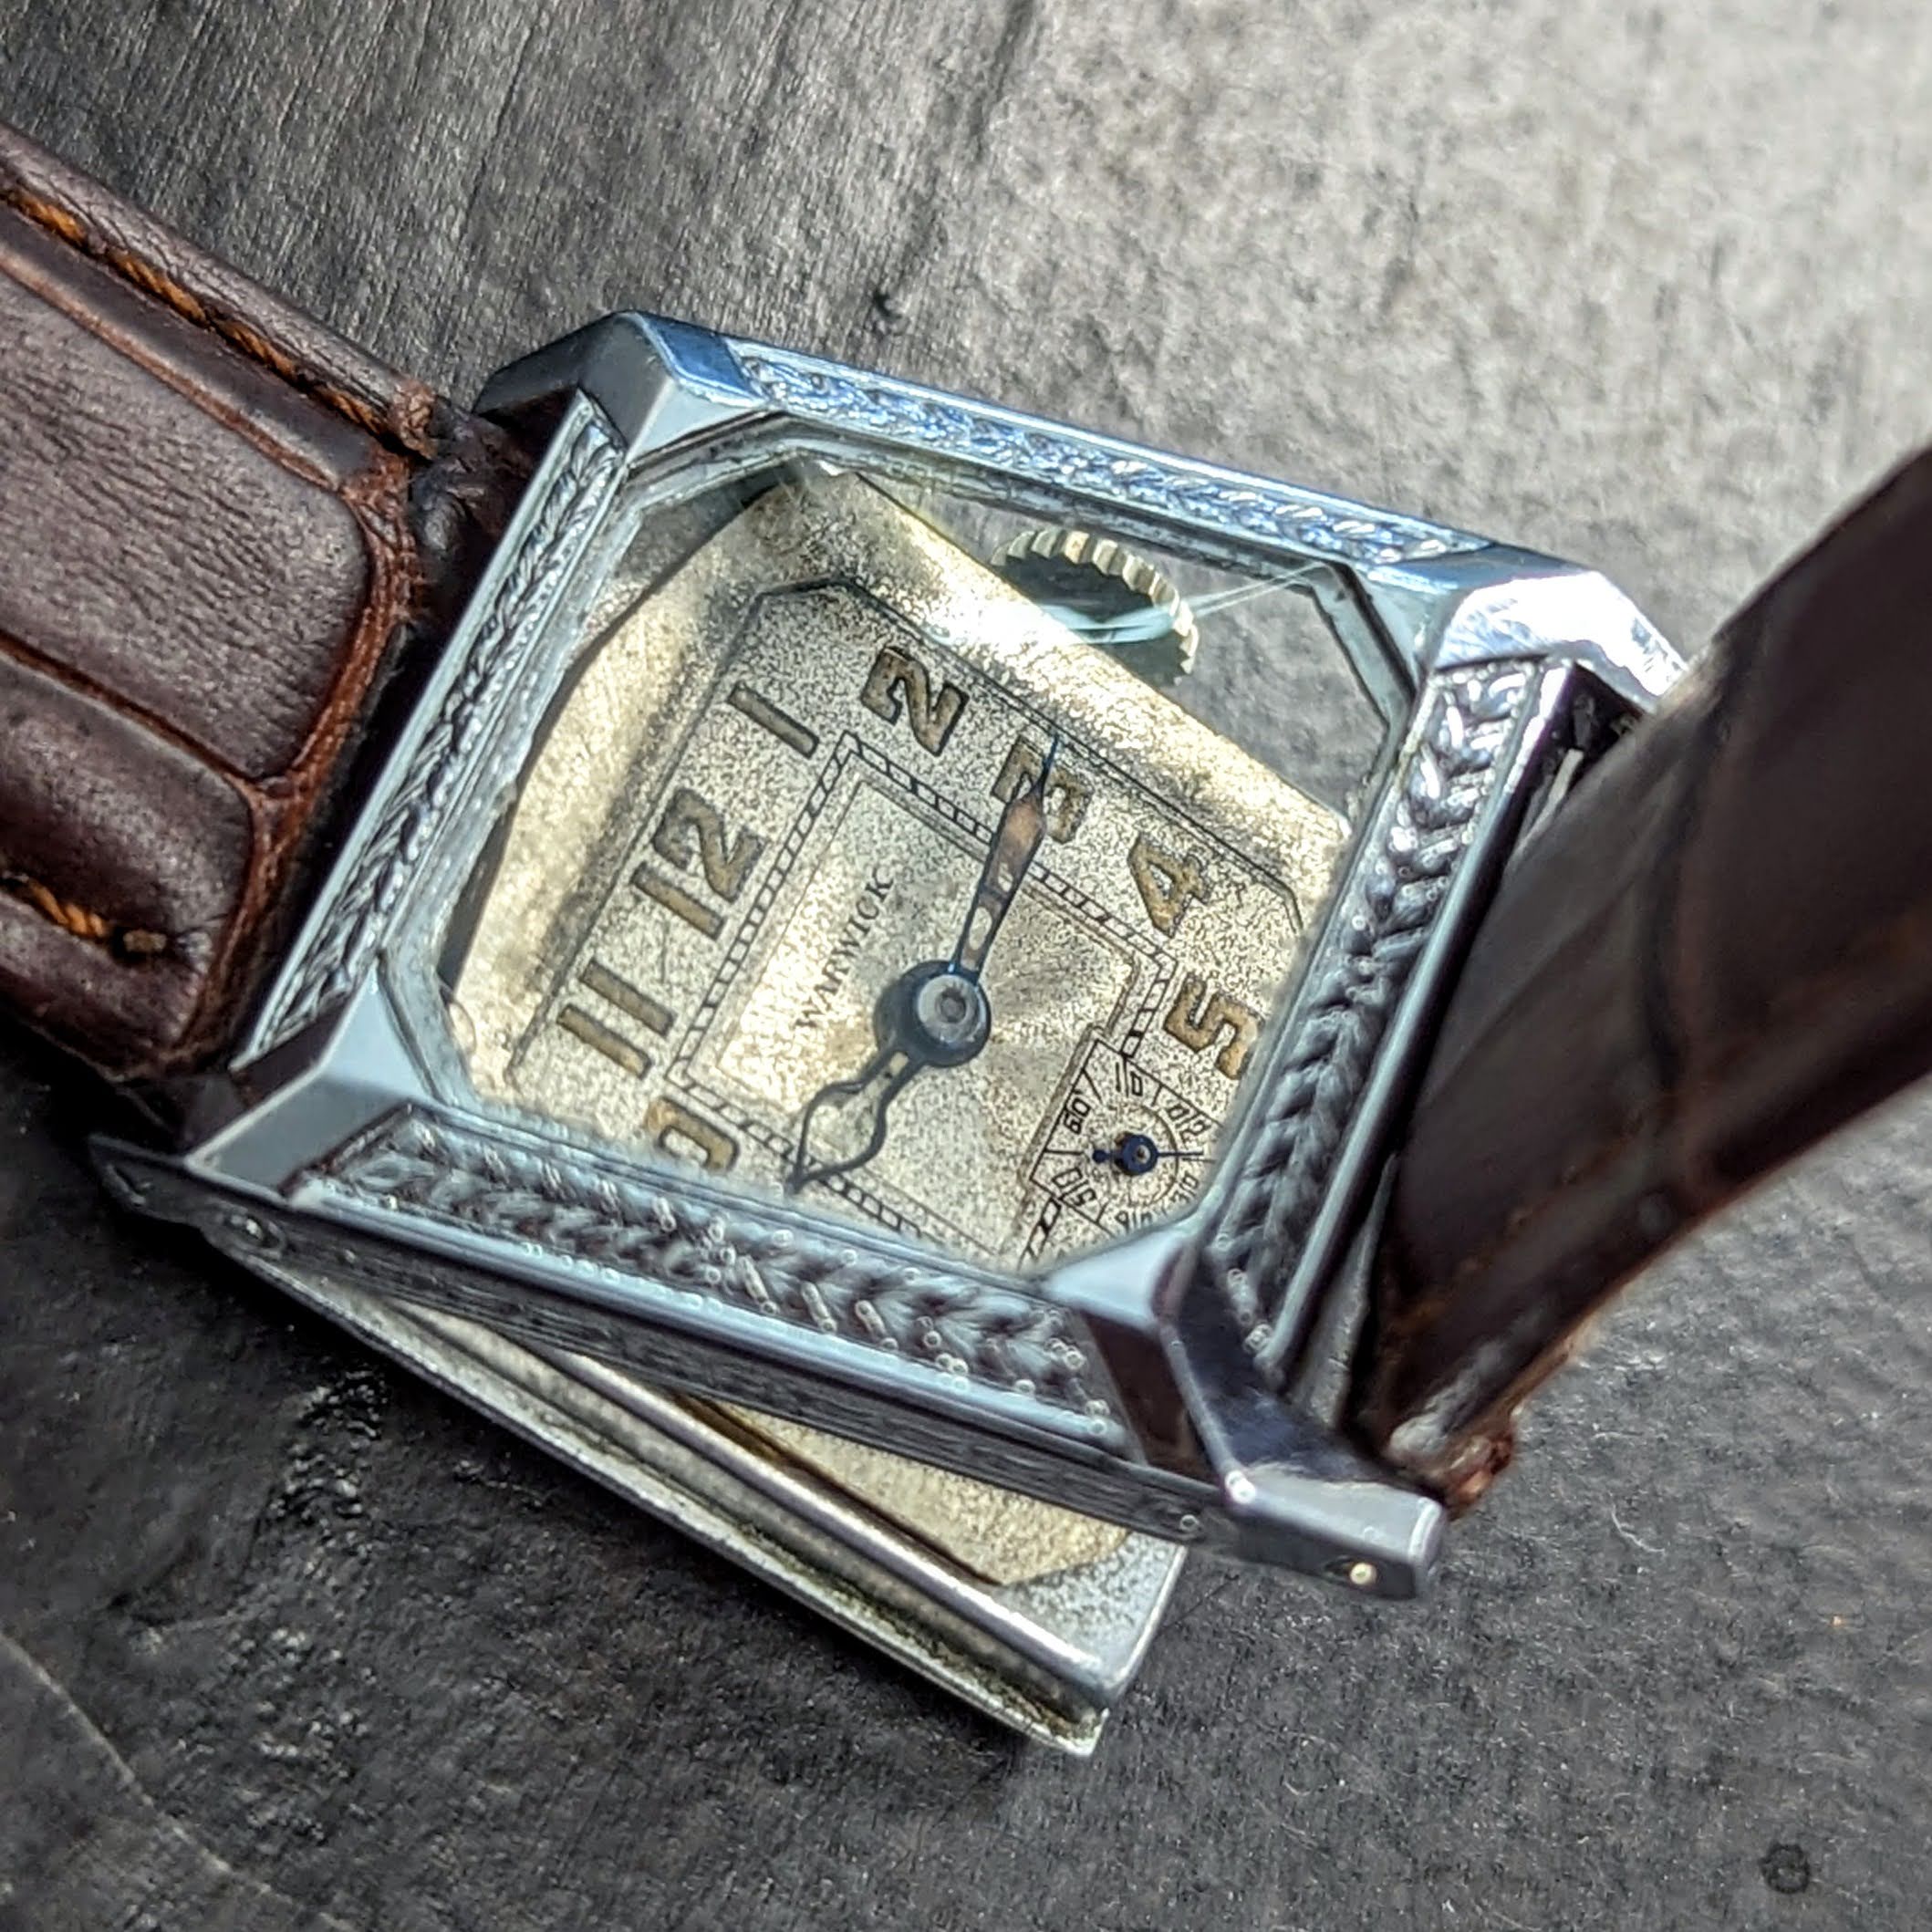 Art Deco WARWICK Wristwatch 6 Jewels Two ADJs Swiss Made Watch Tank Case